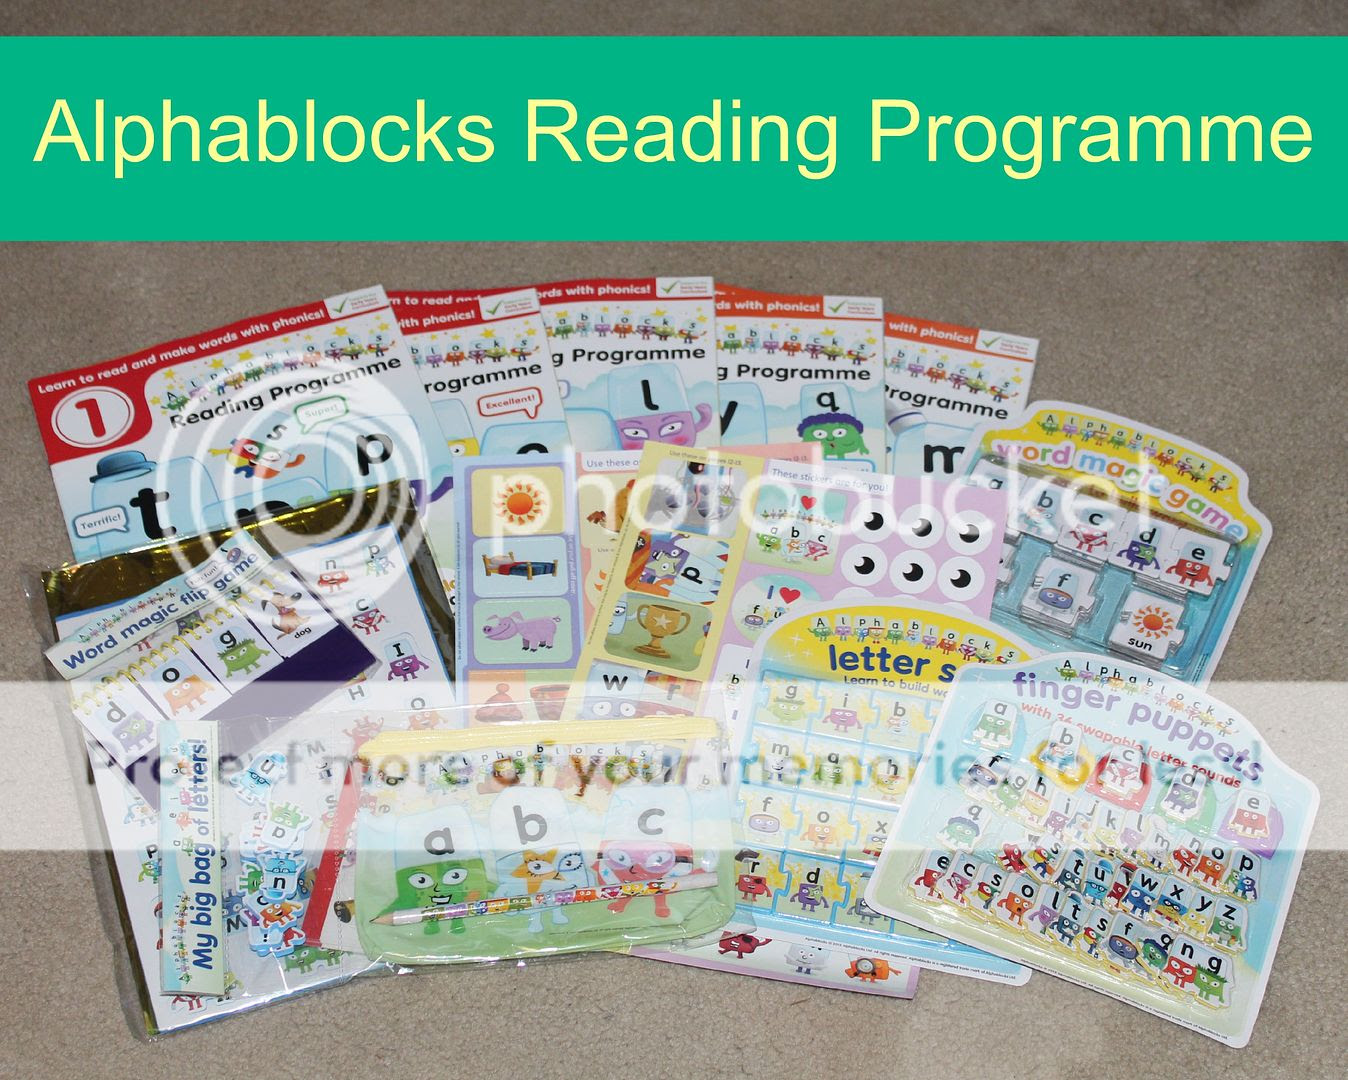 Alphablocks reading programme